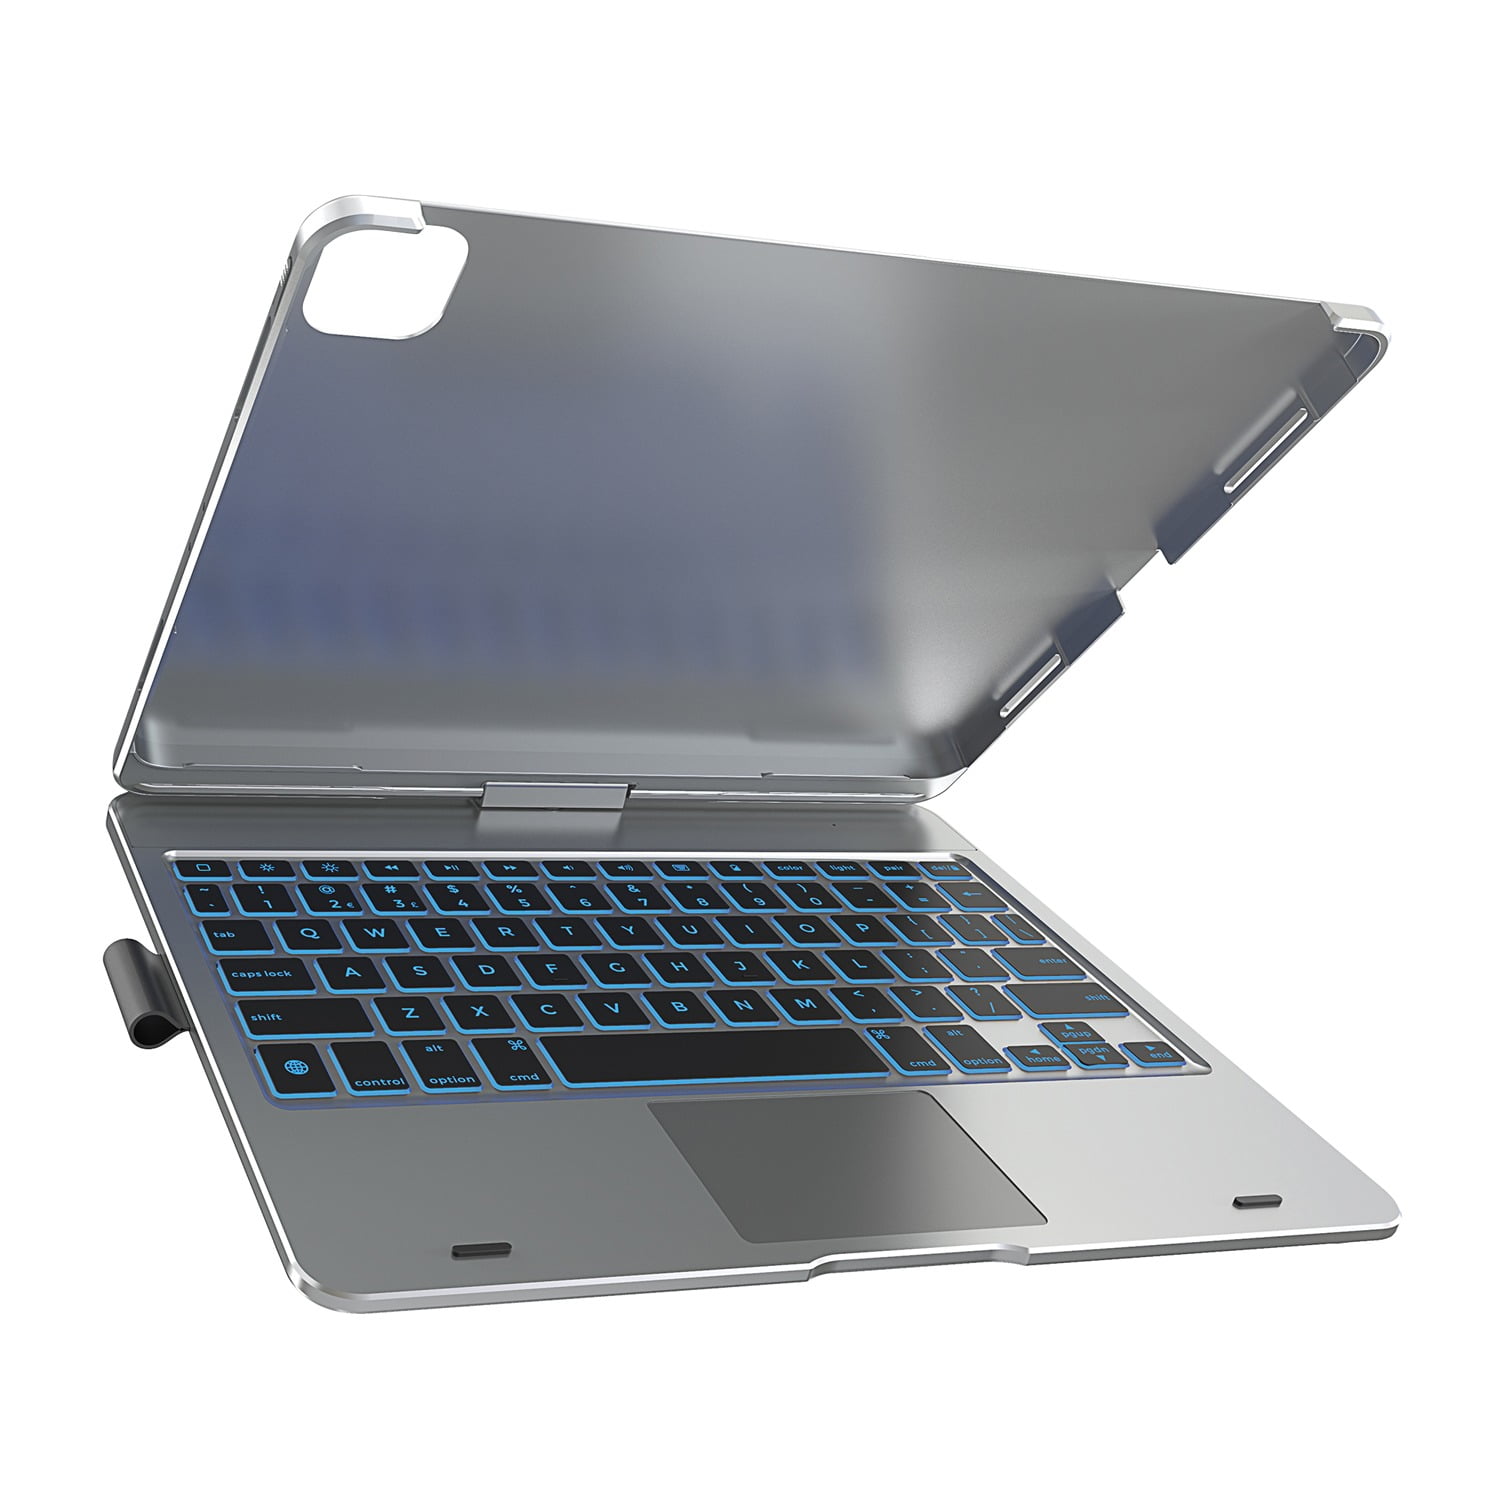 TYPECASE Flexbook Touch iPad Keyboard Case Unboxing, Setup